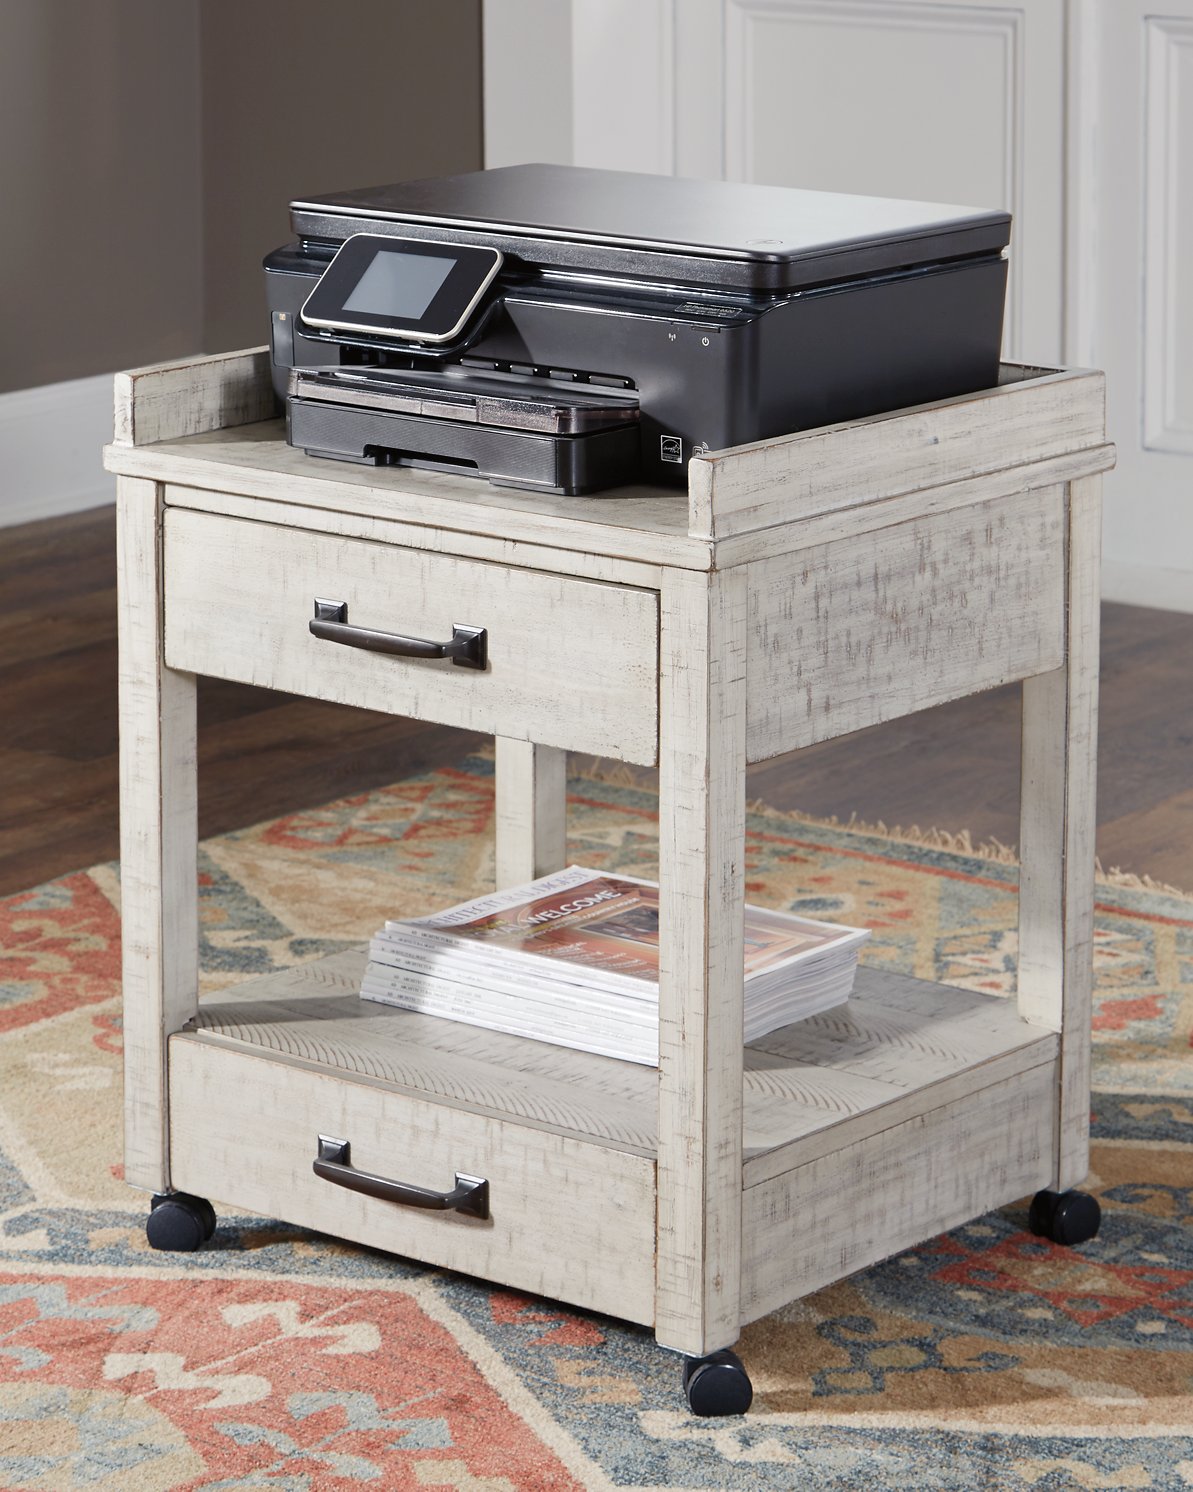 Carynhurst Printer Stand - Romeo & Juliet Furniture (Warren,MI)